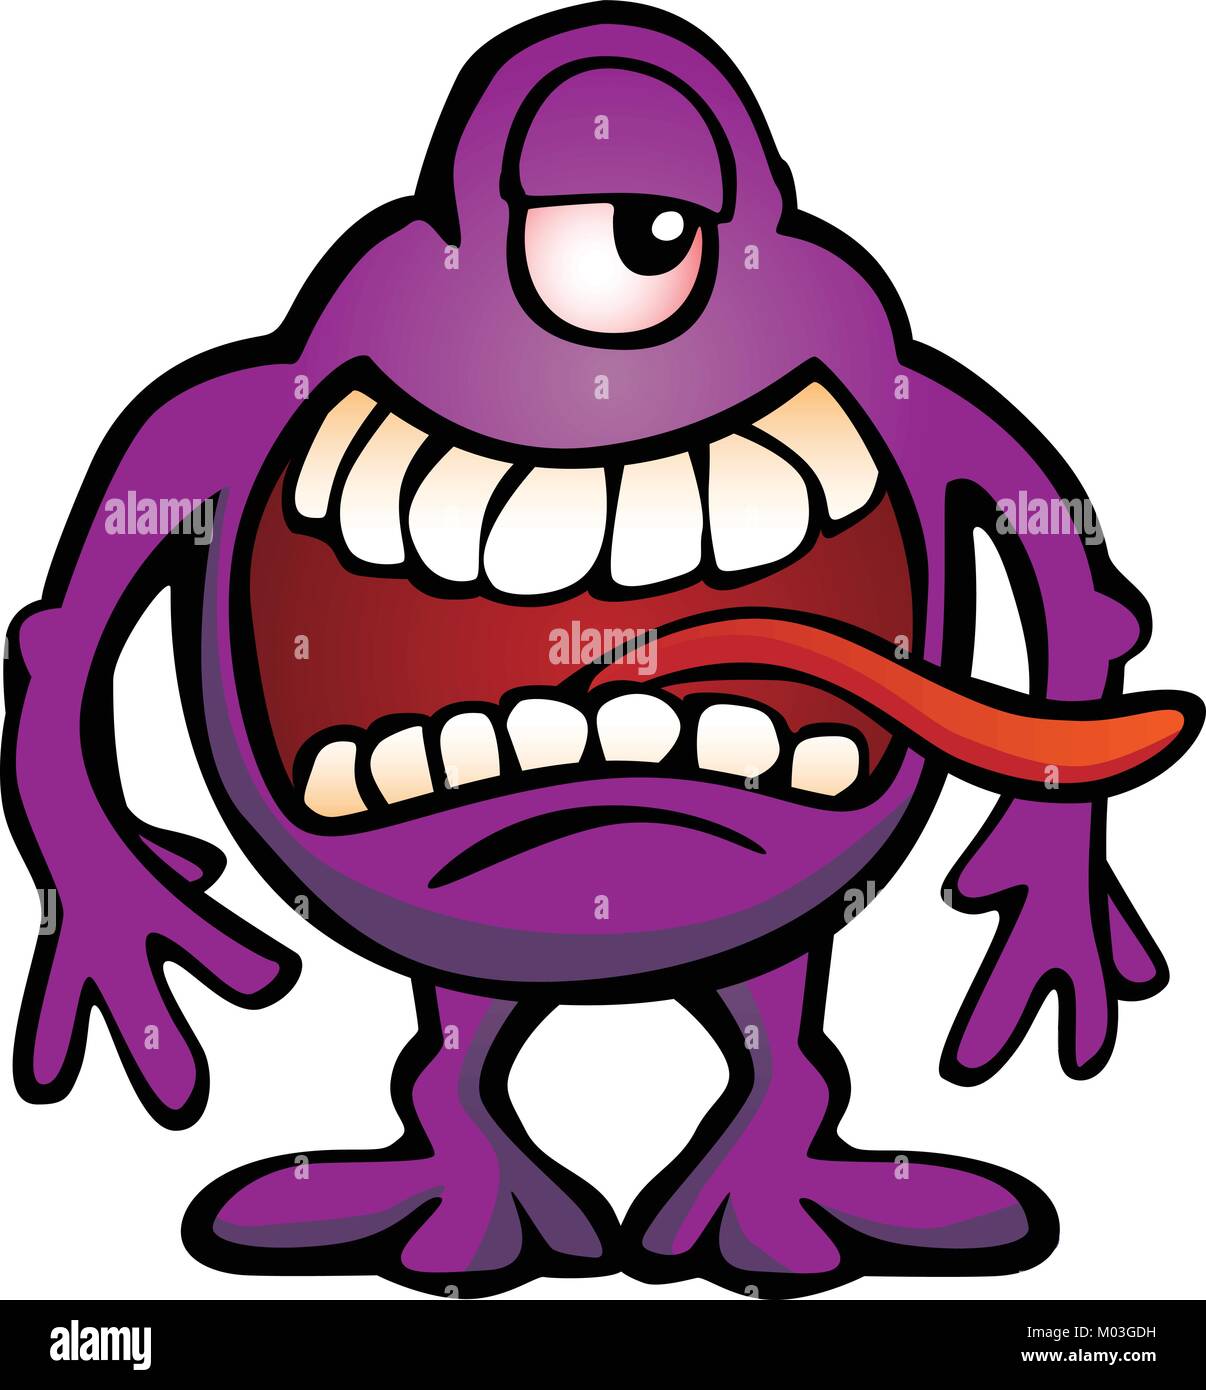 Silly Alien Monster creatura Cartoon illustrazione vettoriale Illustrazione Vettoriale